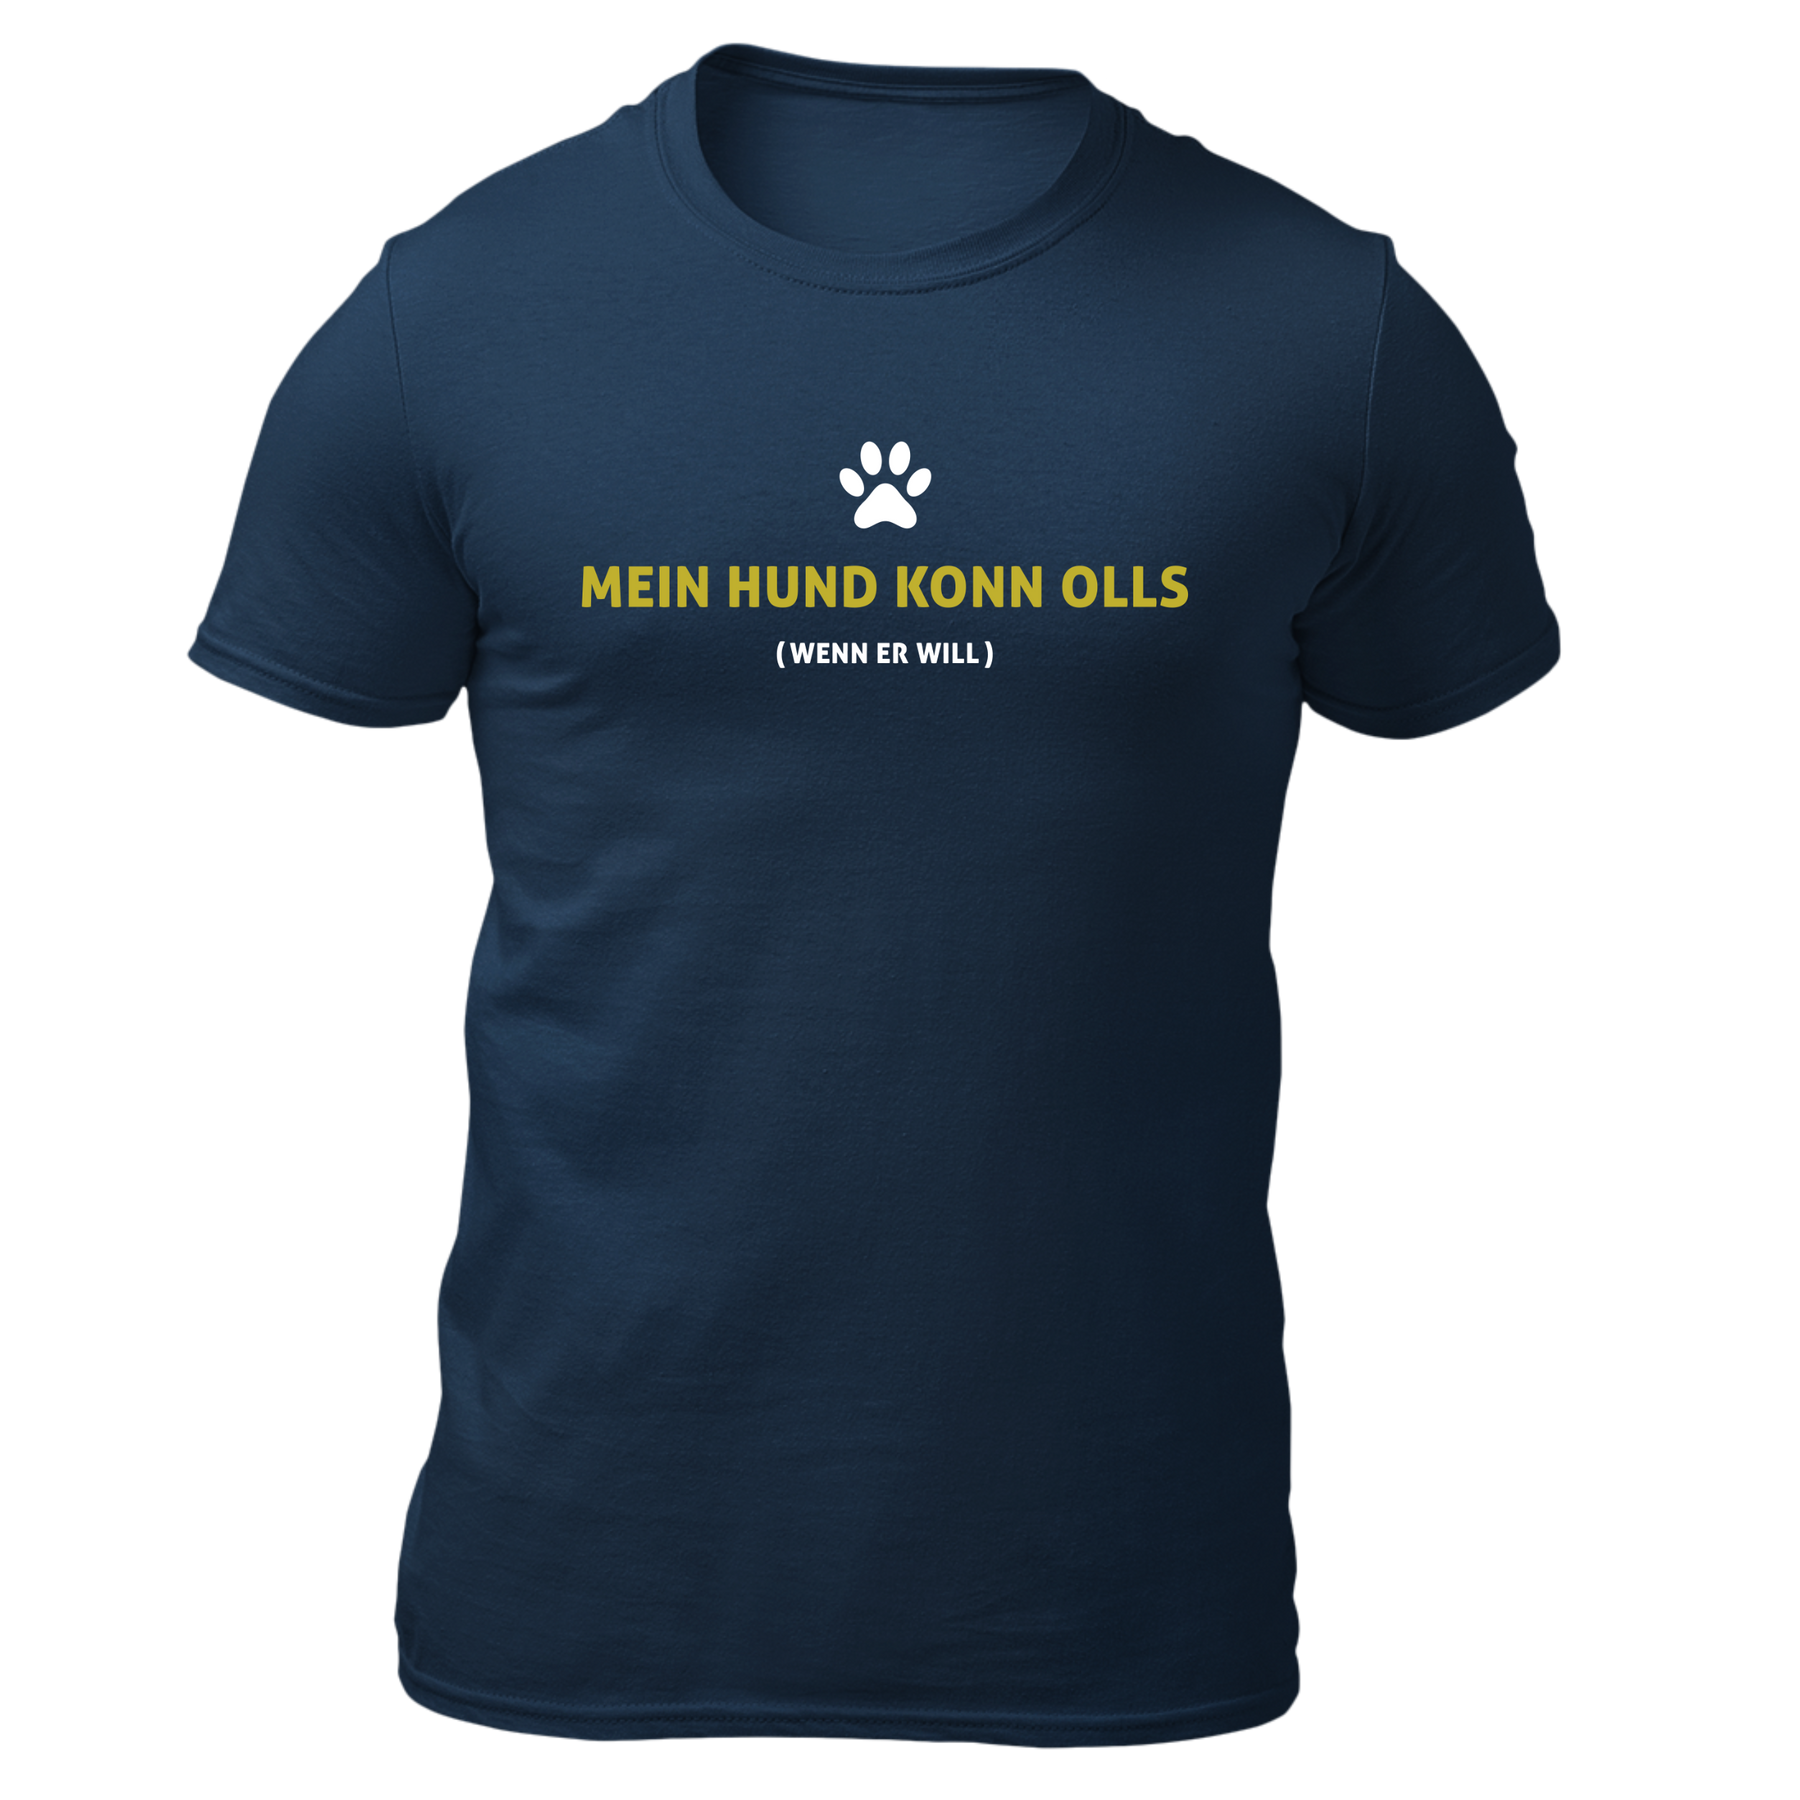 Mein Hund konn olls - Herren Shirt Bio - Navy / S - Shirts & Tops